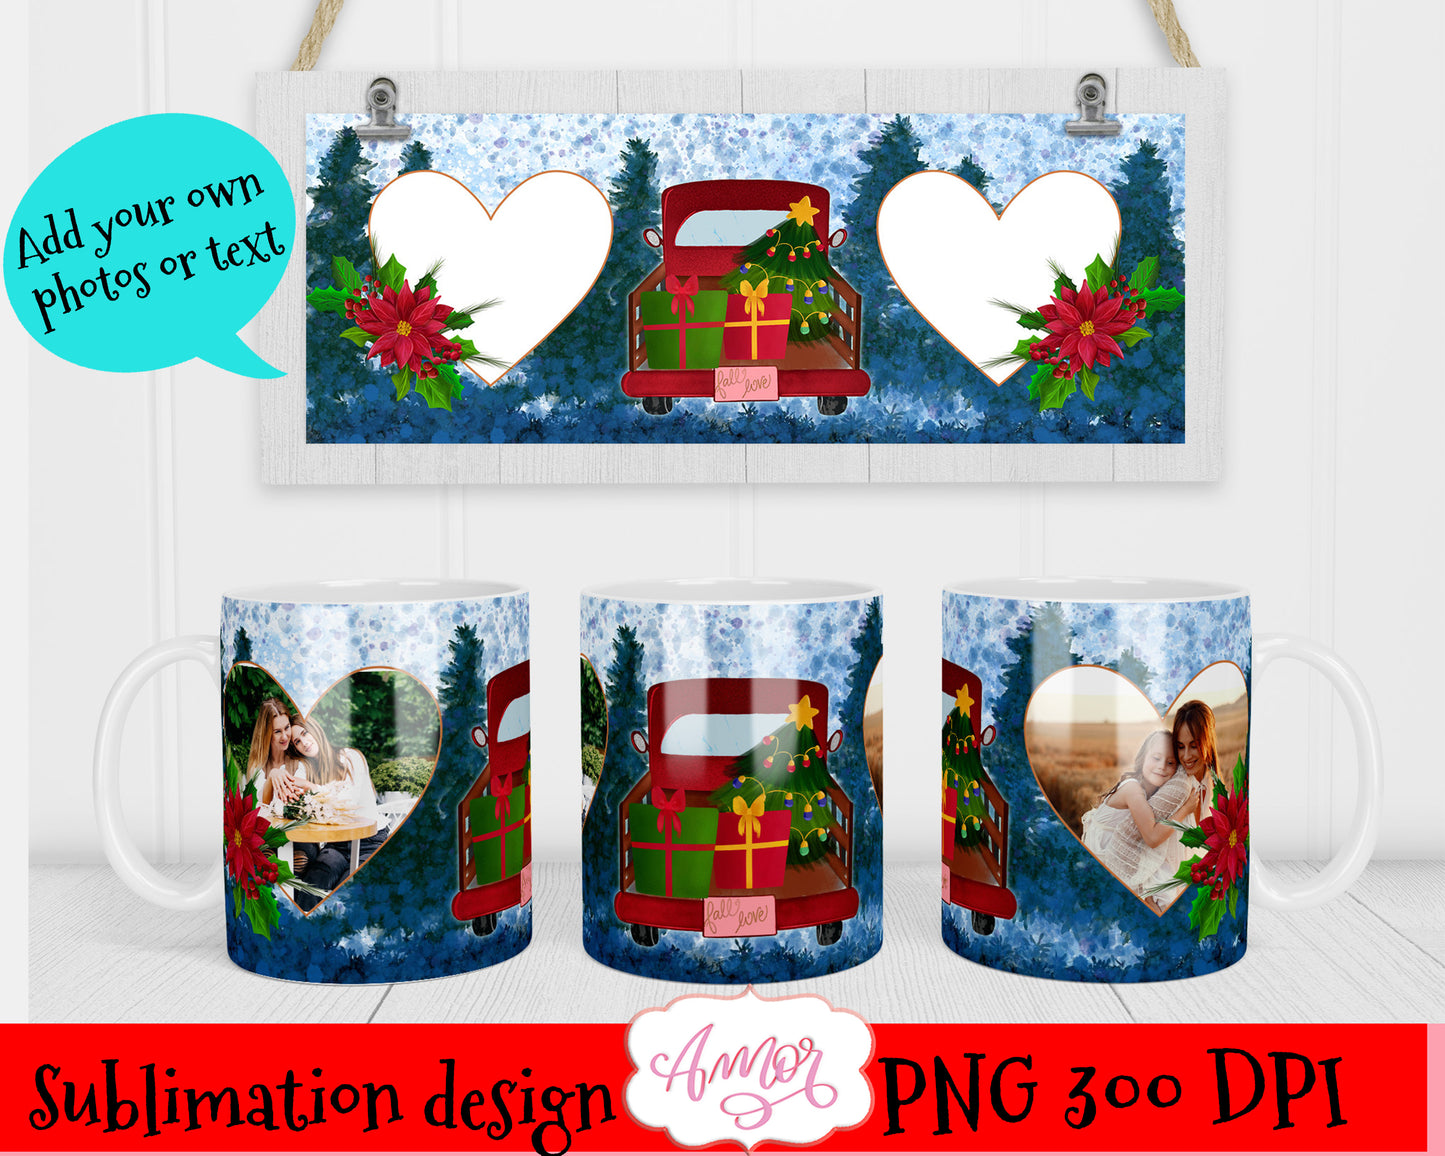 Christmas photo mug design for sublimation